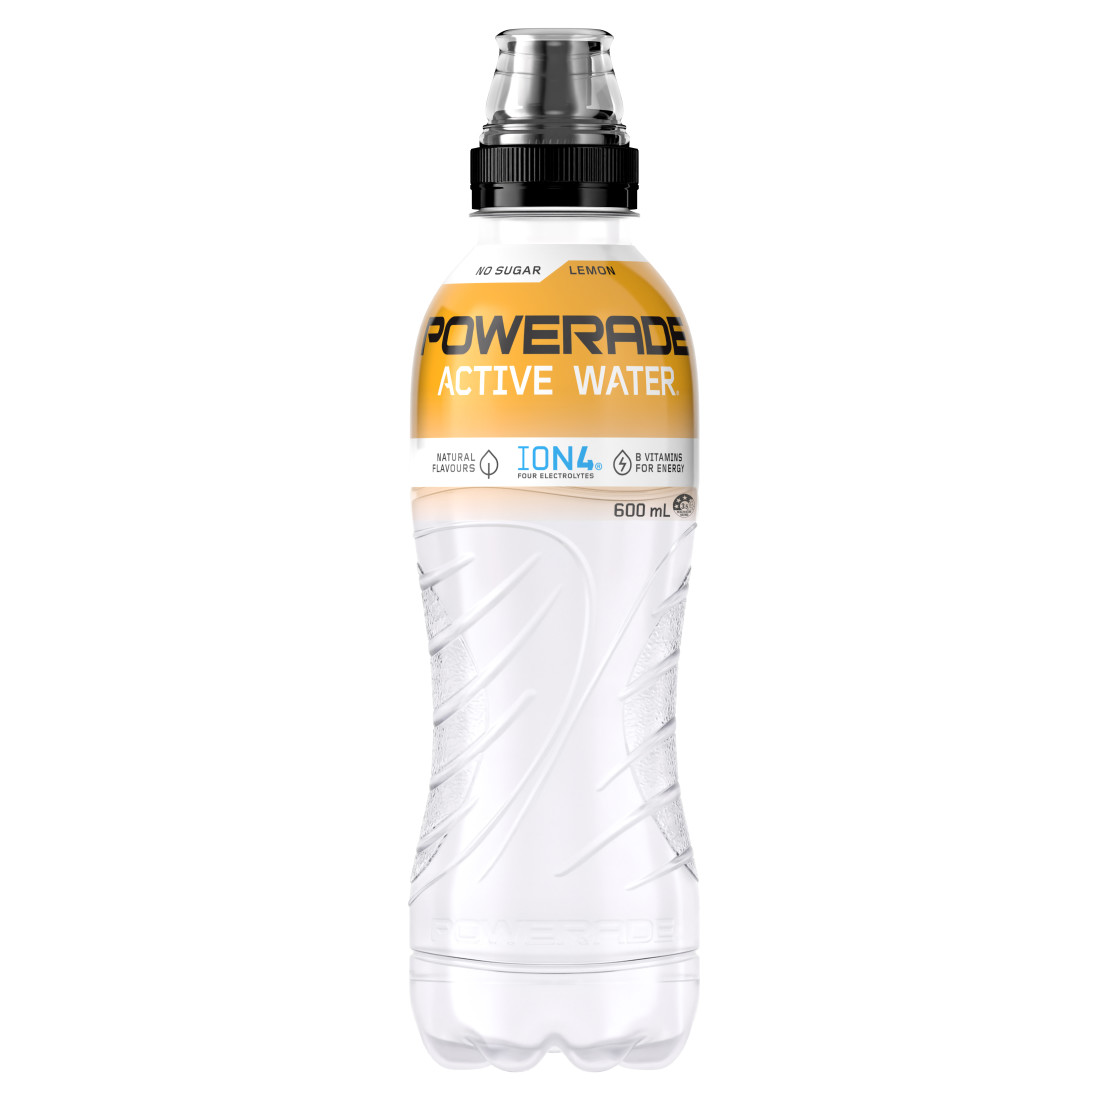 Powerade Active Water Lemon bottle